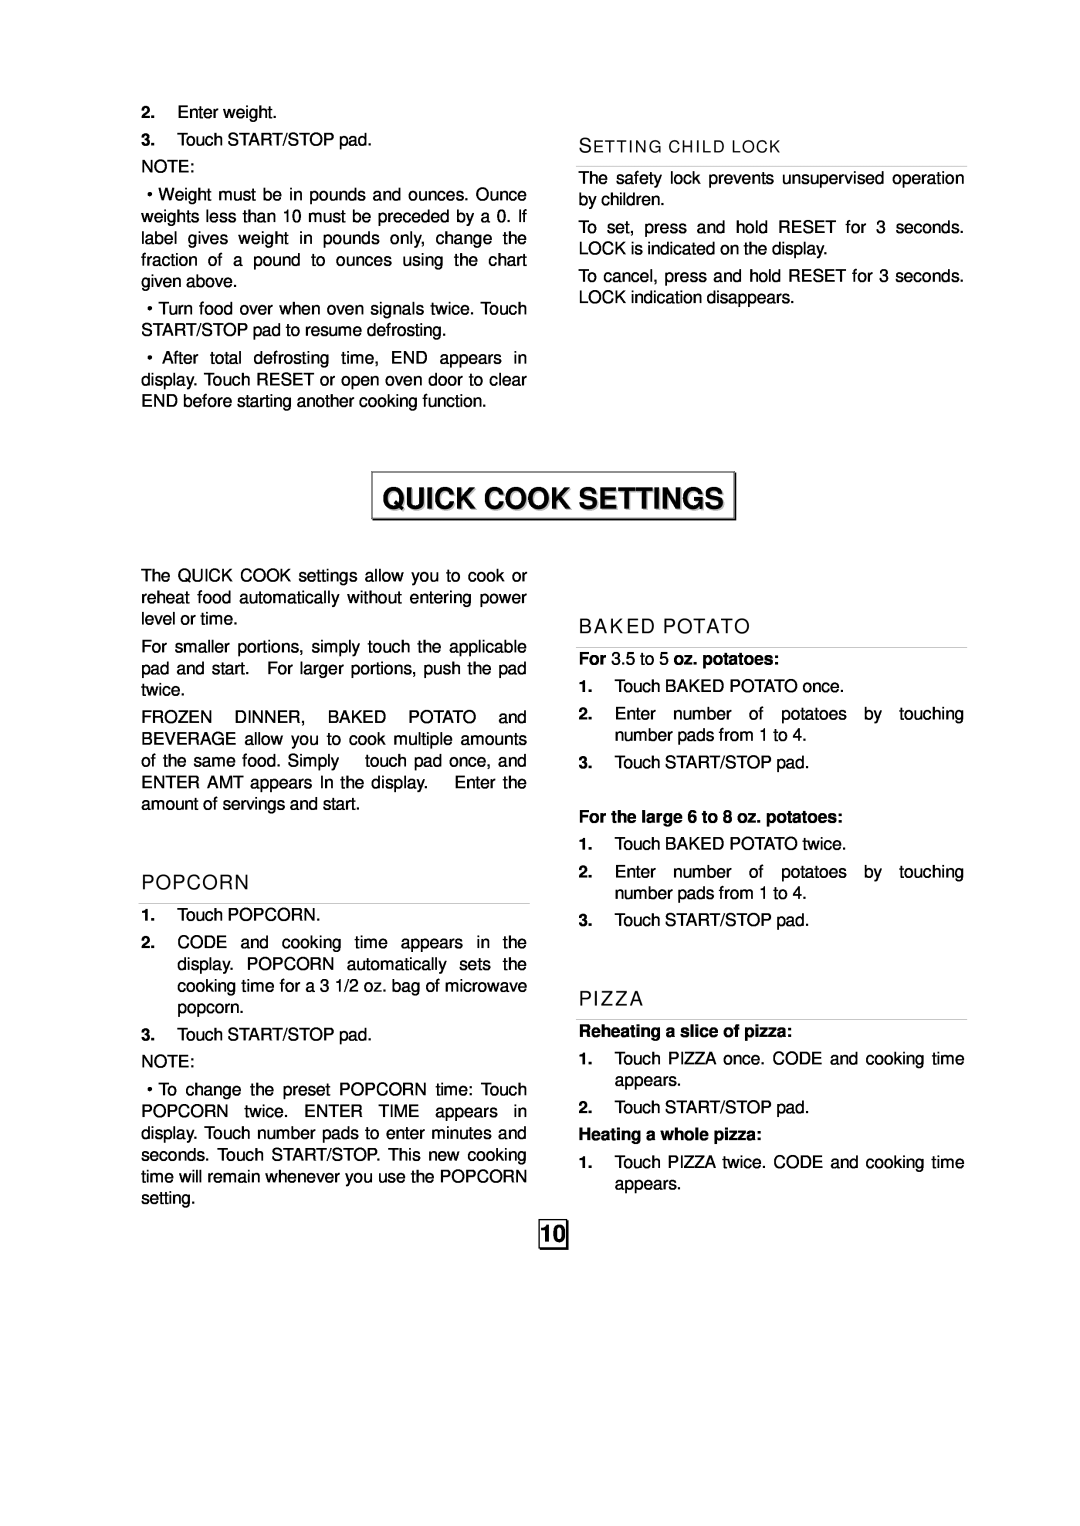 Sunbeam SMW992 owner manual Quick Cook Settings, Popcorn, Baked Potato, Pizza 